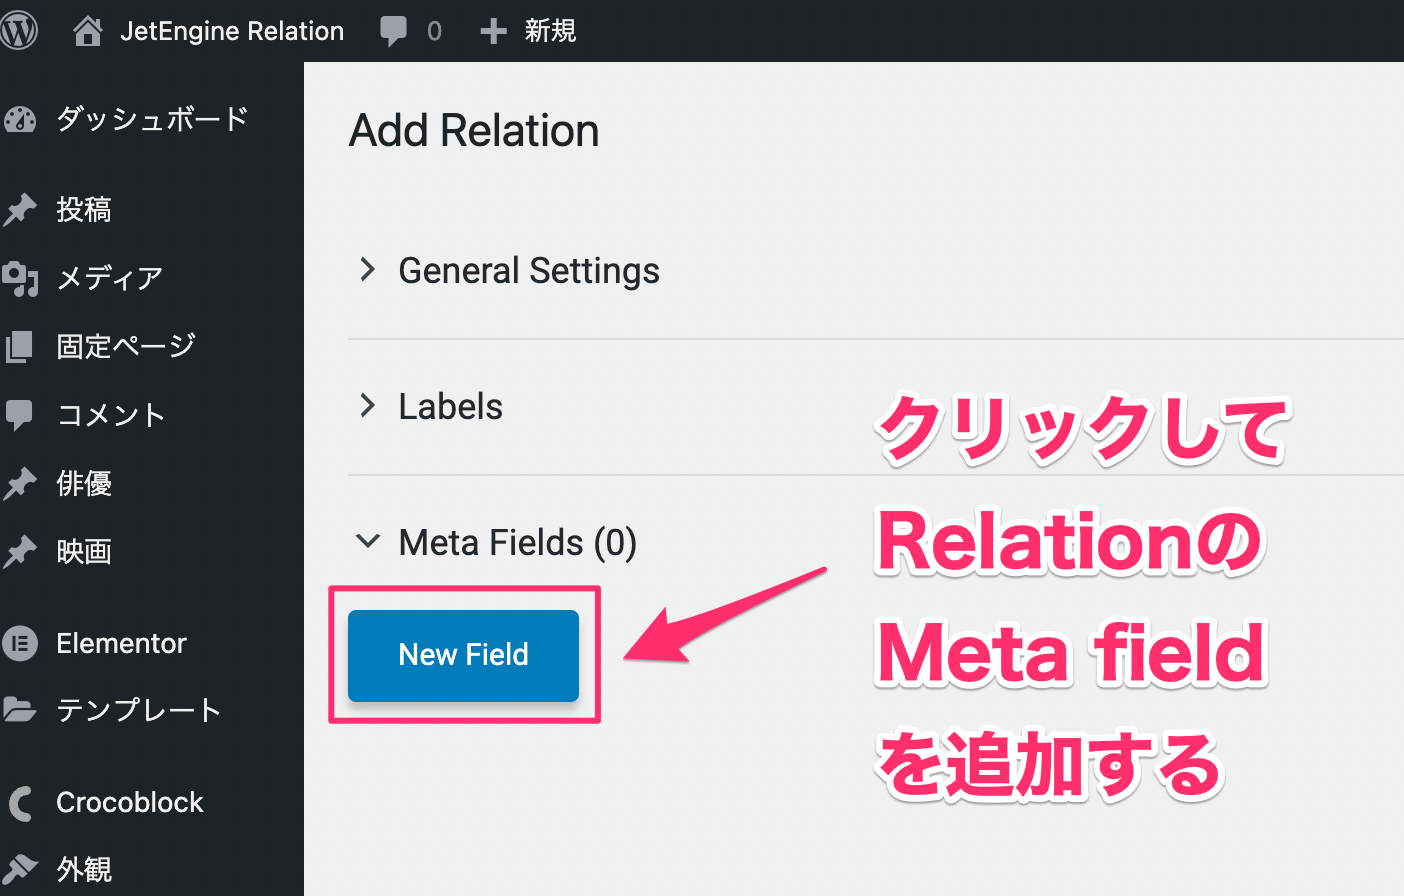 Relationの『Meta Fields』で『New Field』をクリック